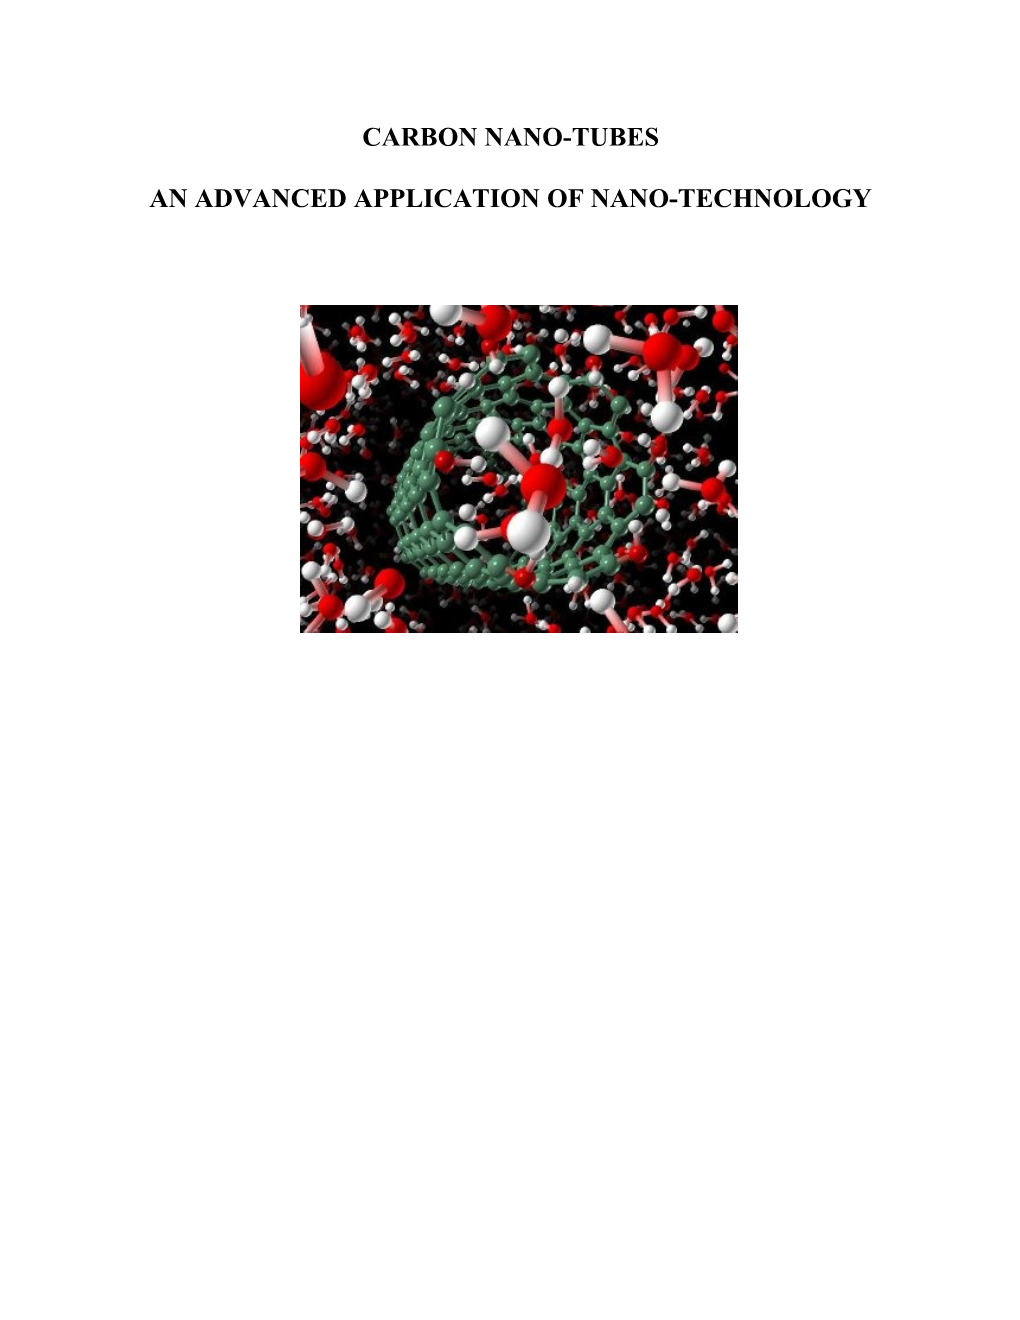 An Advanced Application of Nano-Technology